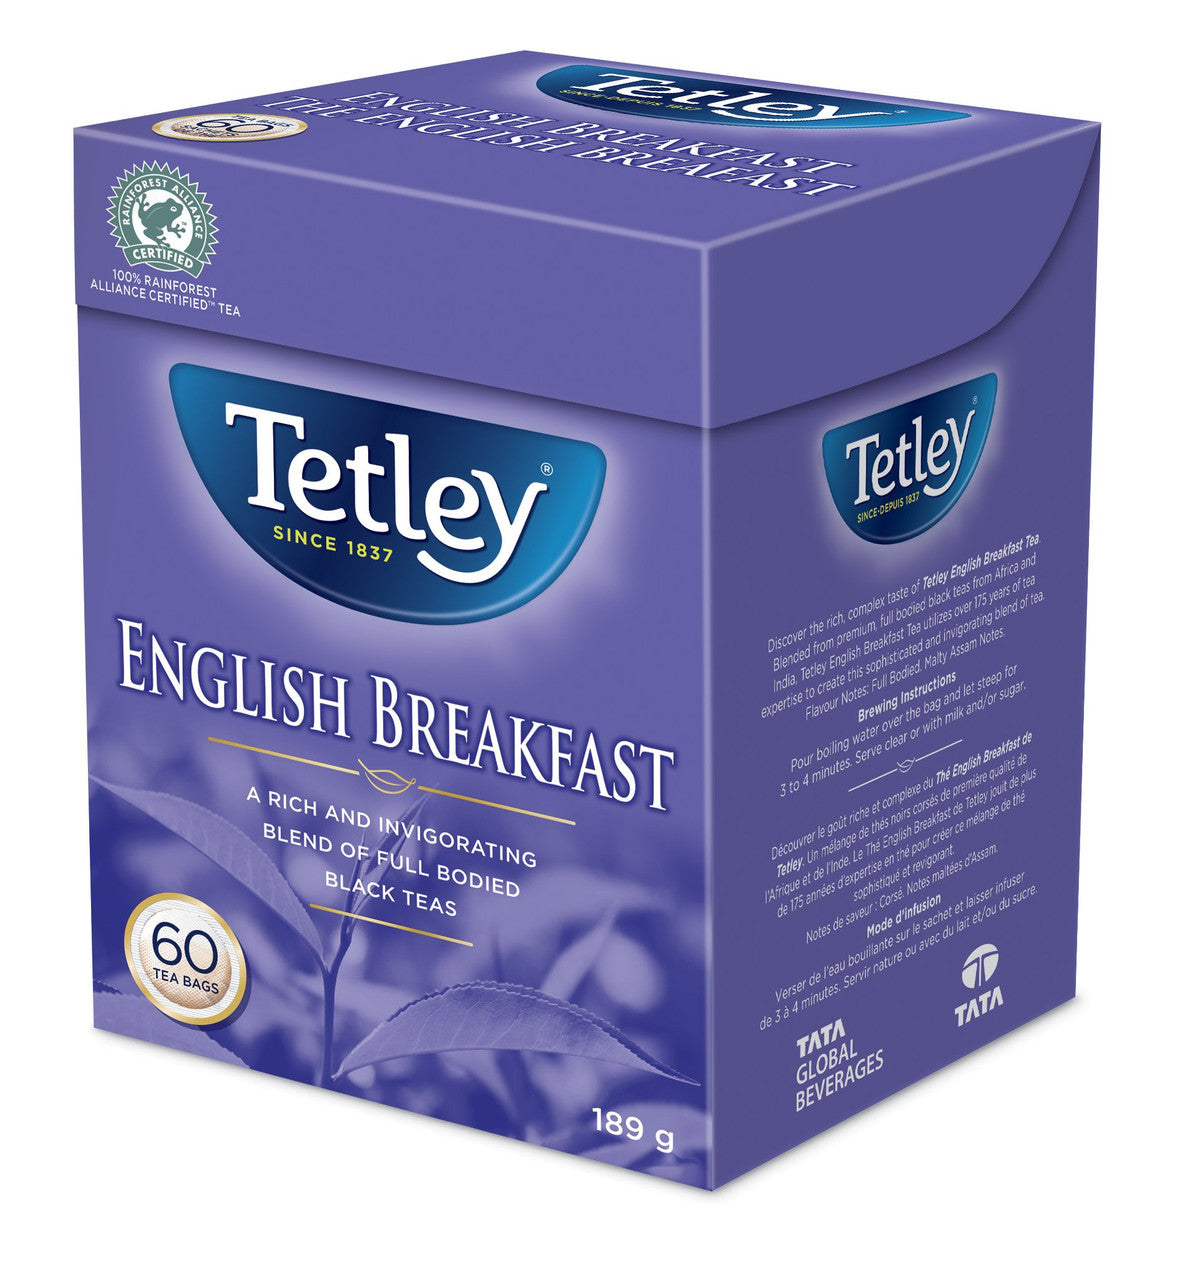 Tetley English Breakfast Tea, 60 Count, 189g/6.7 oz., {Imported from Canada}